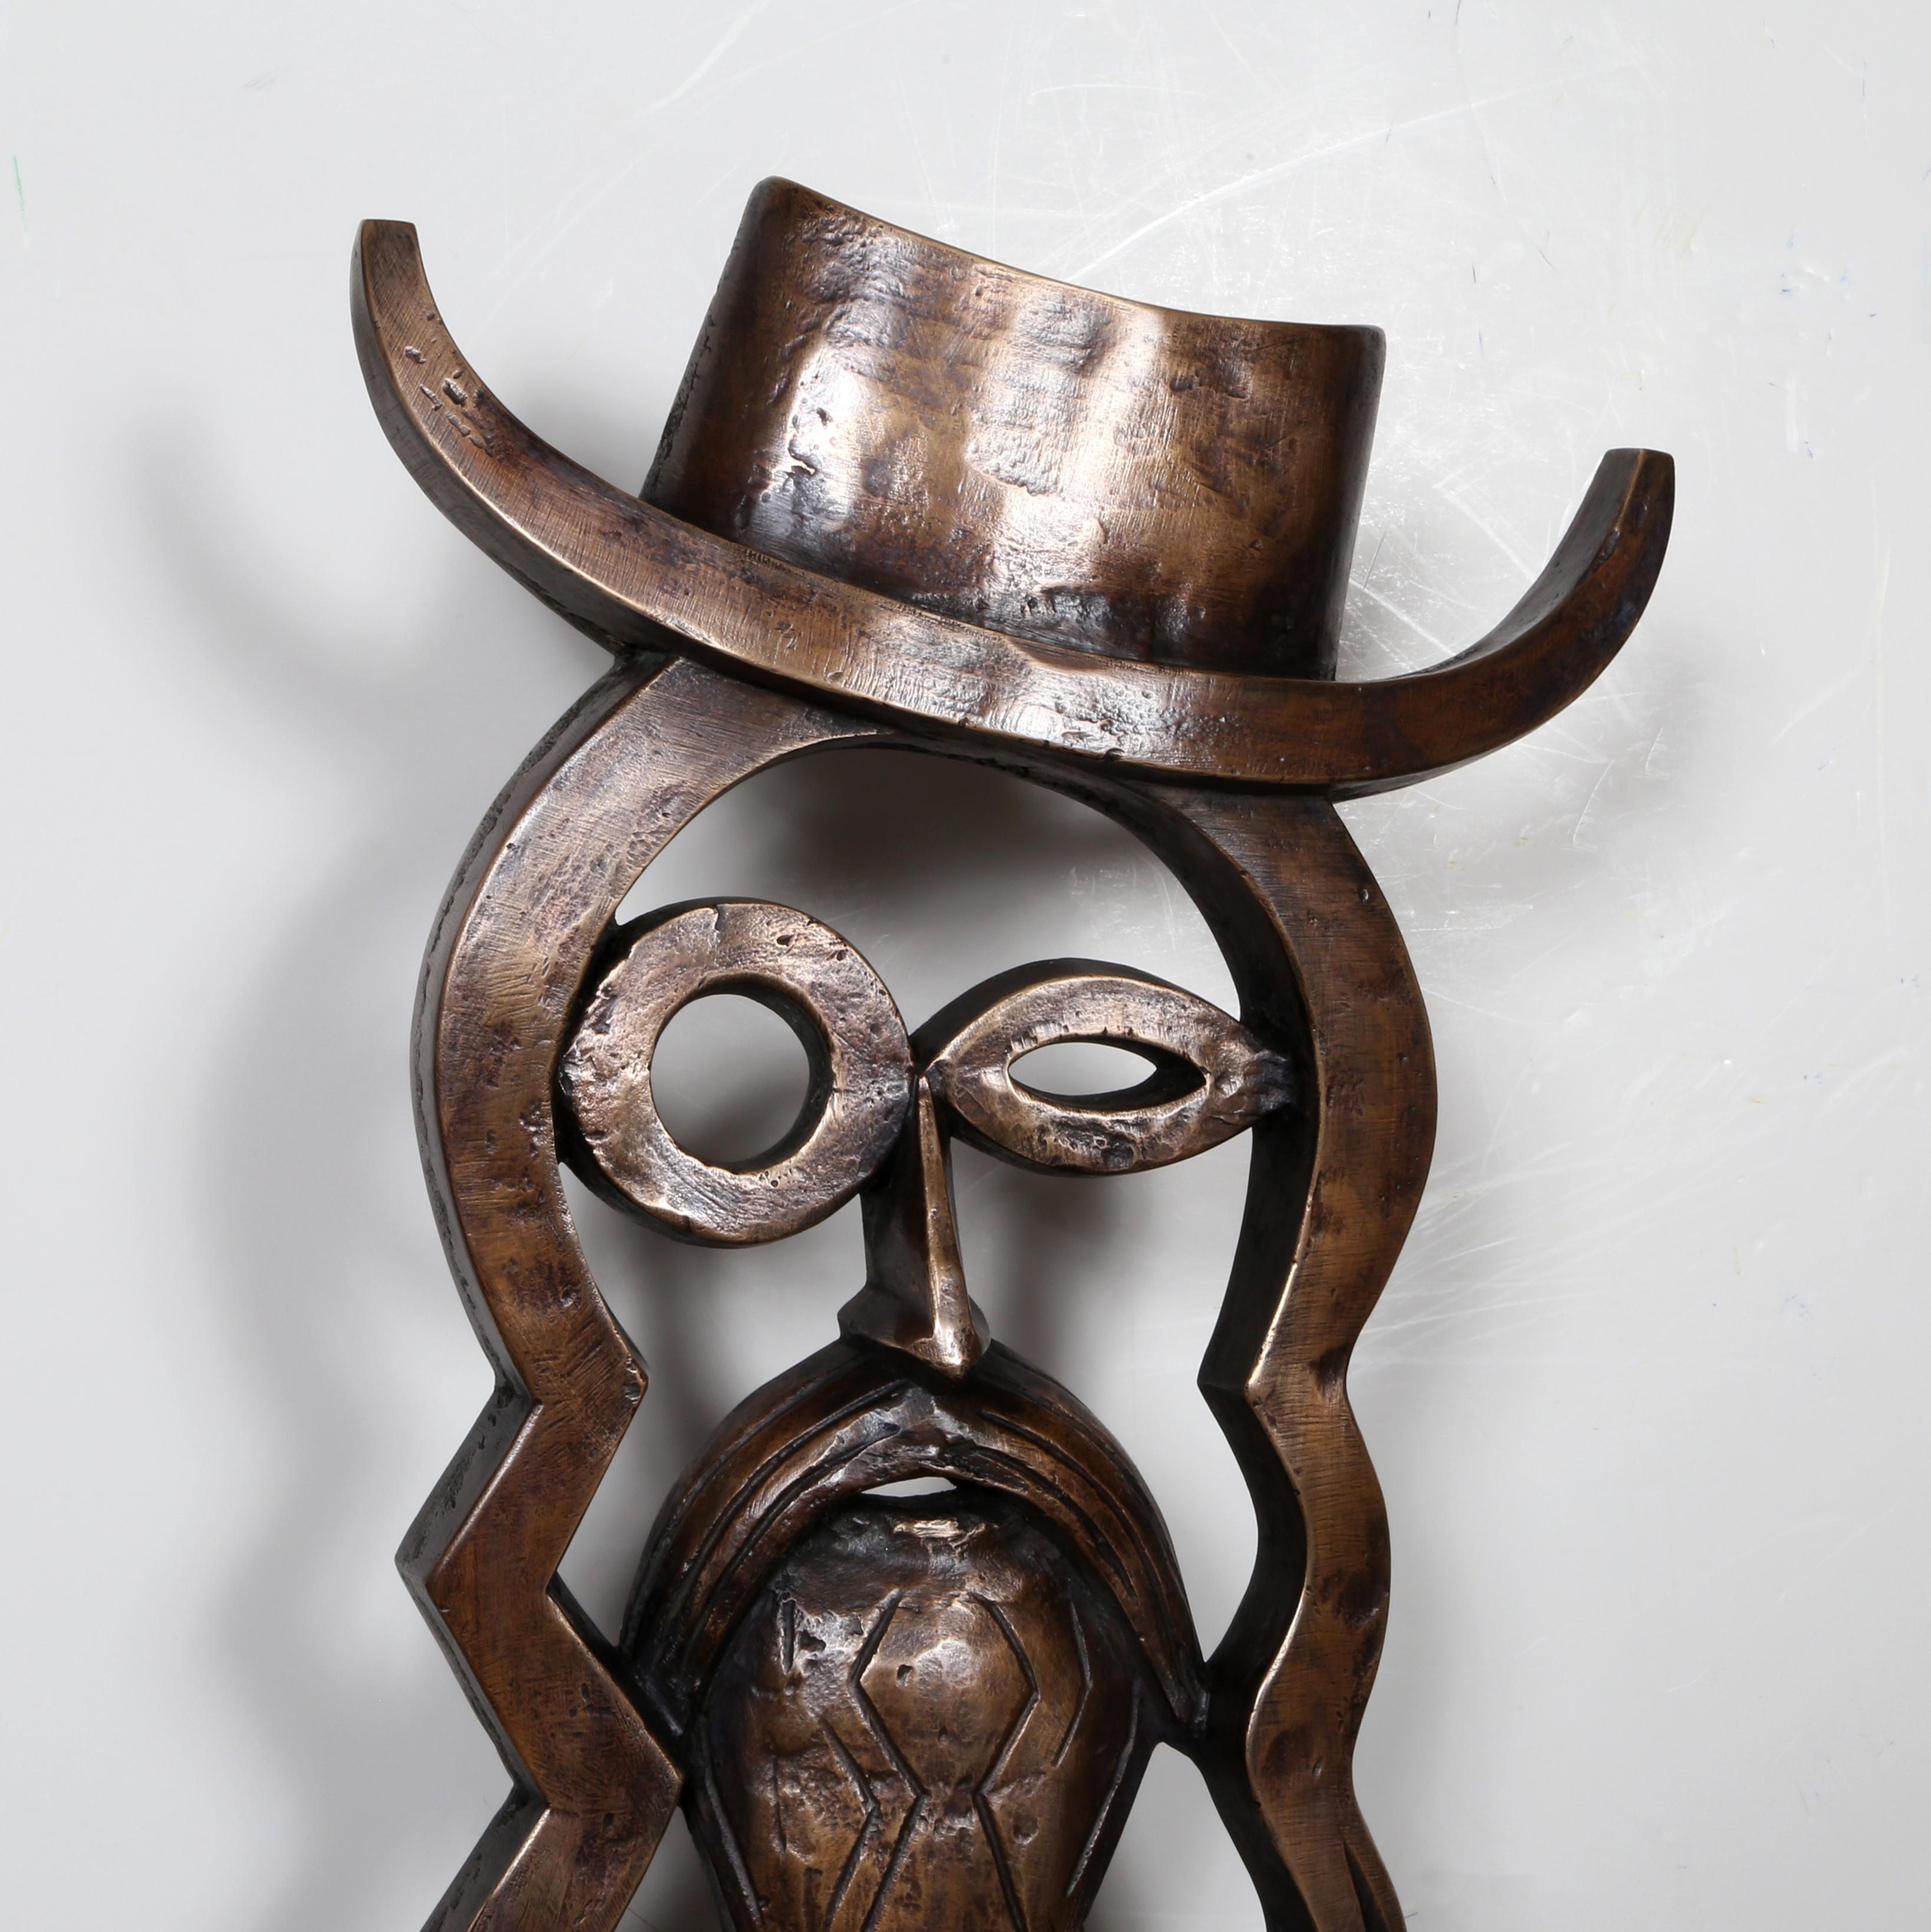 Artist: Constantin Antonovici, Romanian (1911 - 2002)
Title: Hippie - Man
Medium: Bronze Sculpture, signature, date inscribed
Size: 23.5 x 11.5 x 1 in. (59.69 x 29.21 x 2.54 cm)
Marble Base: 3 x 10 x 8.5 inches

An original bronze sculpture by